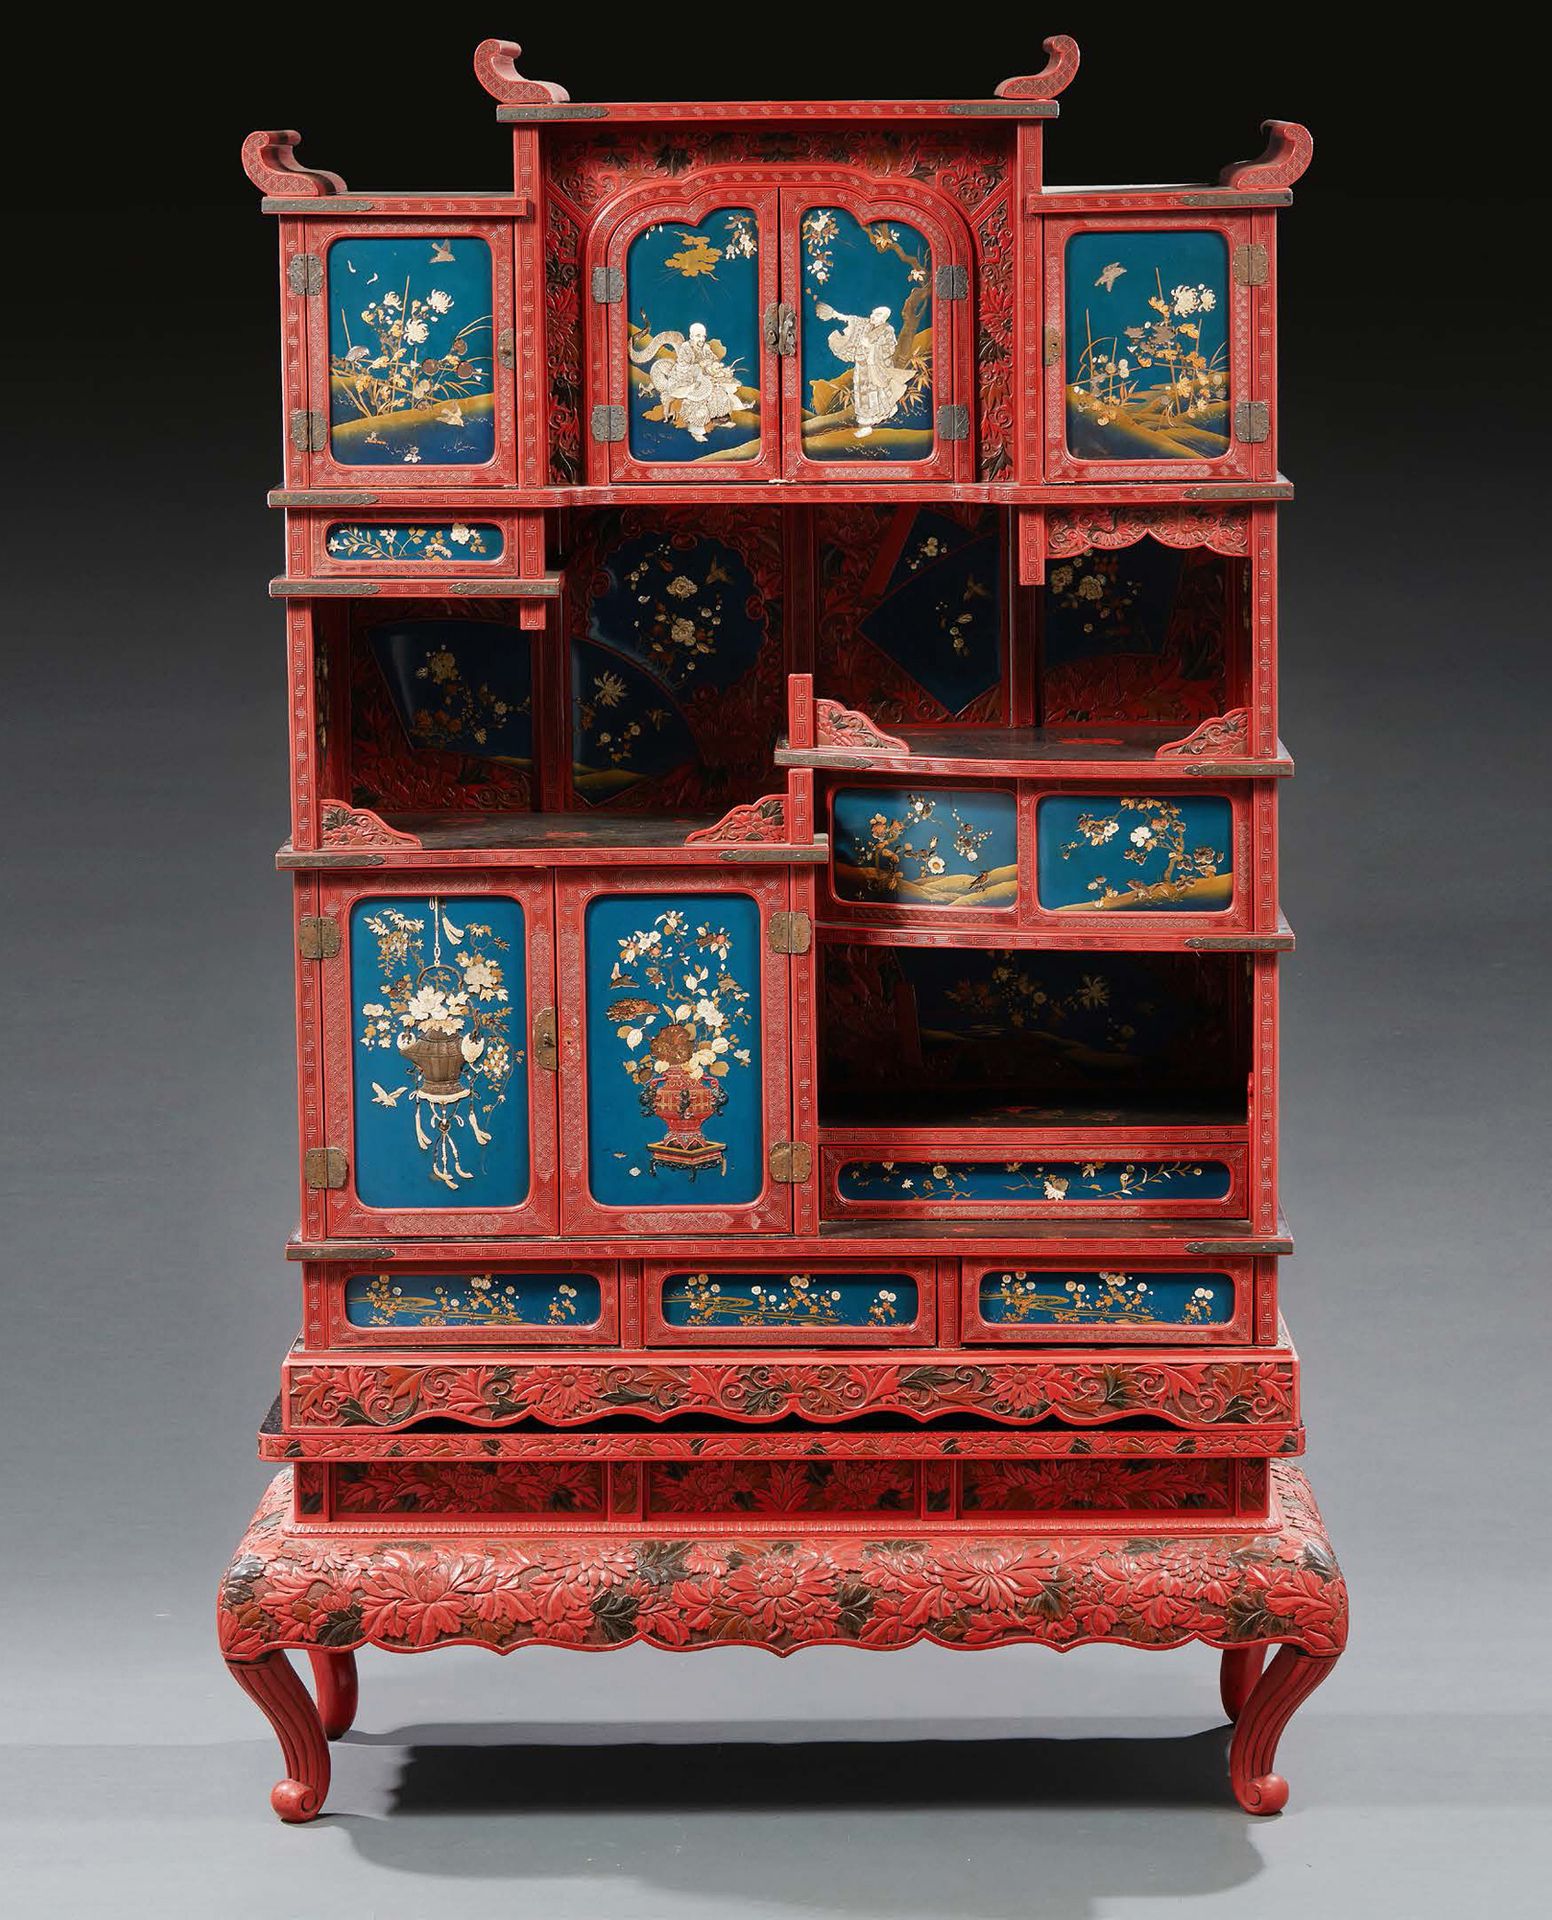 JAPON 一个朱砂漆的卡扎里达纳柜，上面有花和格子的图案。蓝漆饰面上镶嵌着精美的珍珠母、骨和木质镶嵌，描绘着花束和神灵。侧面也是黑漆的。
明治时期（1868-&hellip;